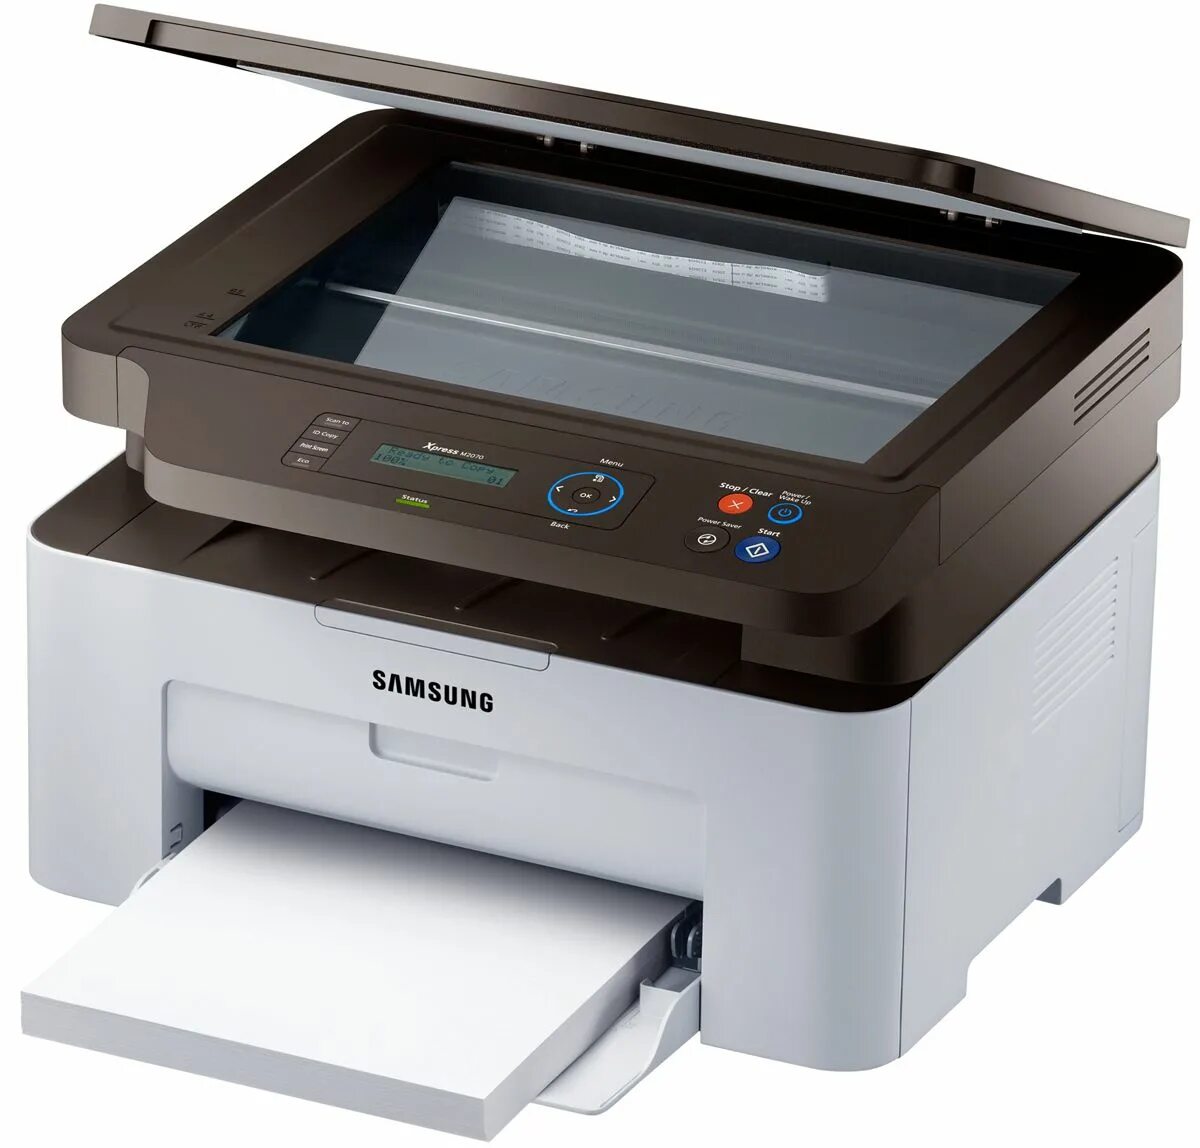 МФУ Samsung 2070w. Принтер Samsung Xpress m2020. Samsung Xpress m2070w. Принтер самсунг Xpress m2070w.